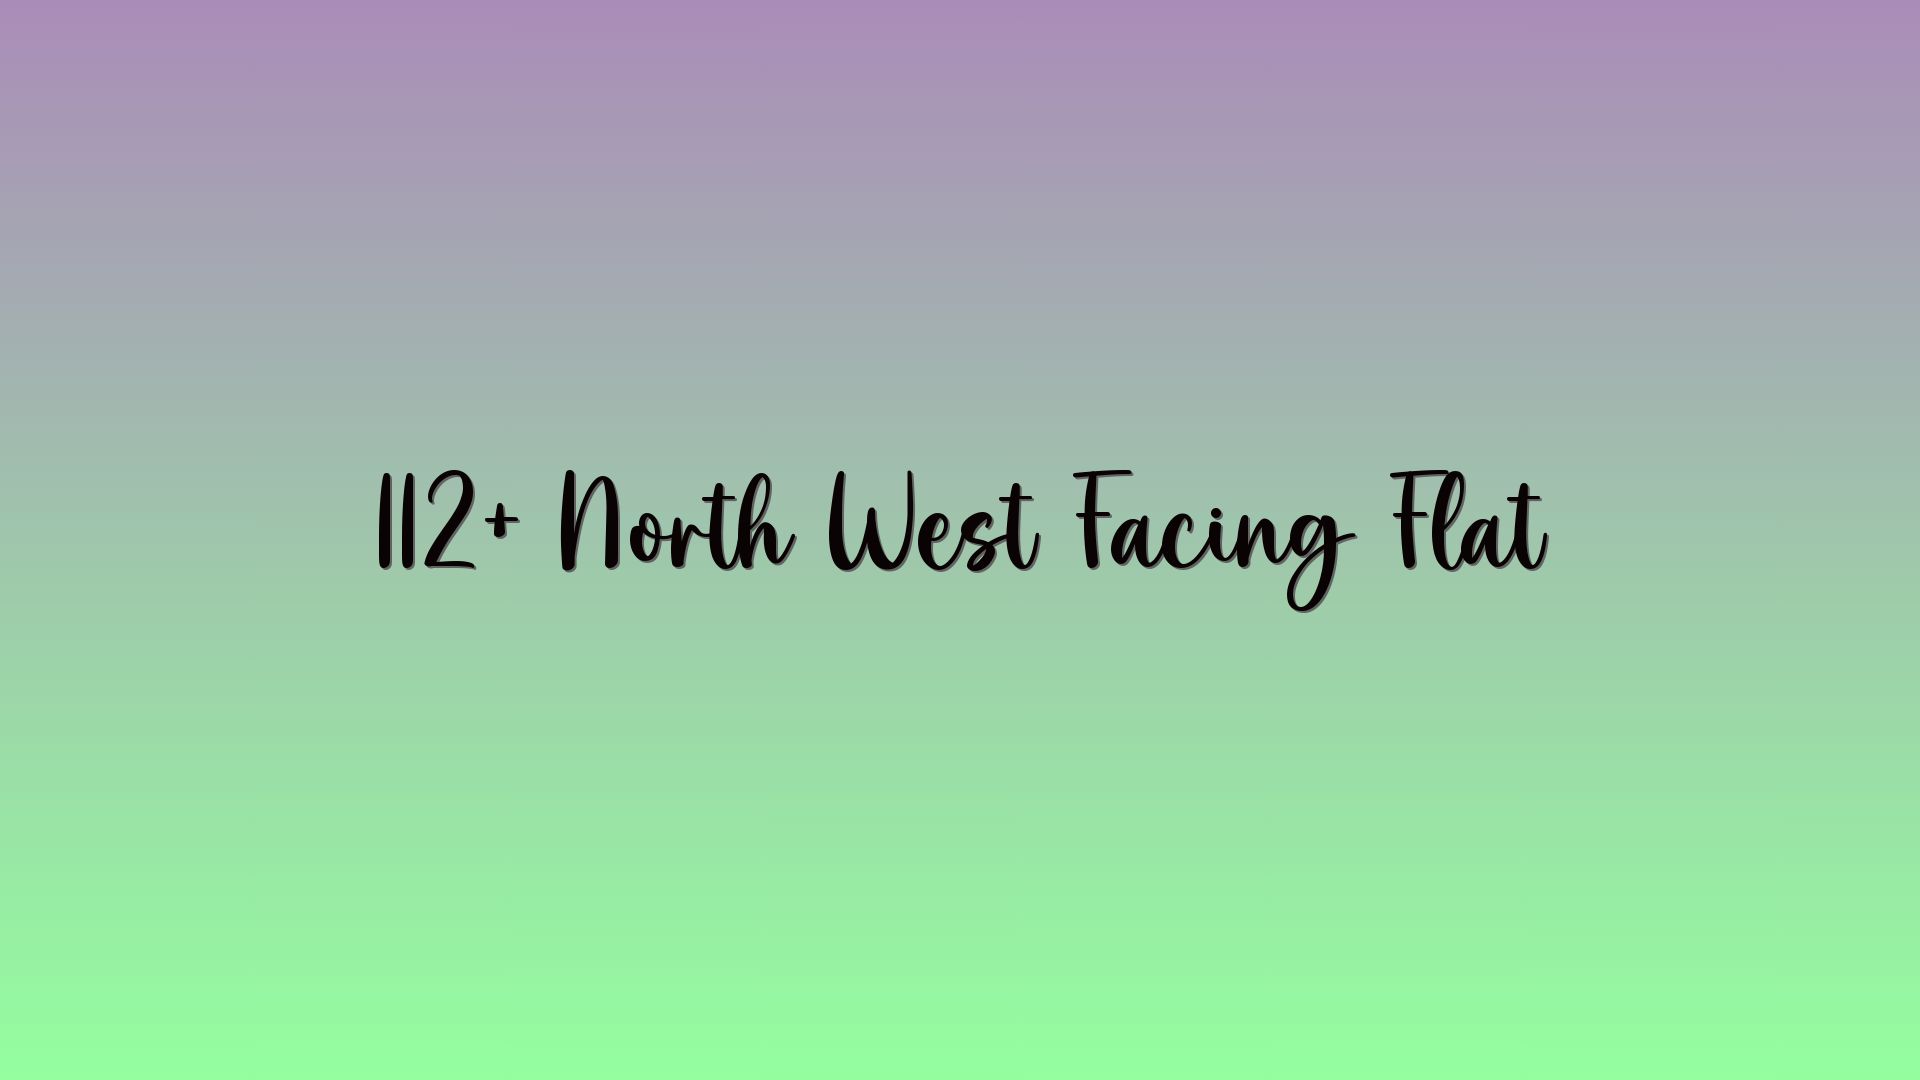 112+ North West Facing Flat